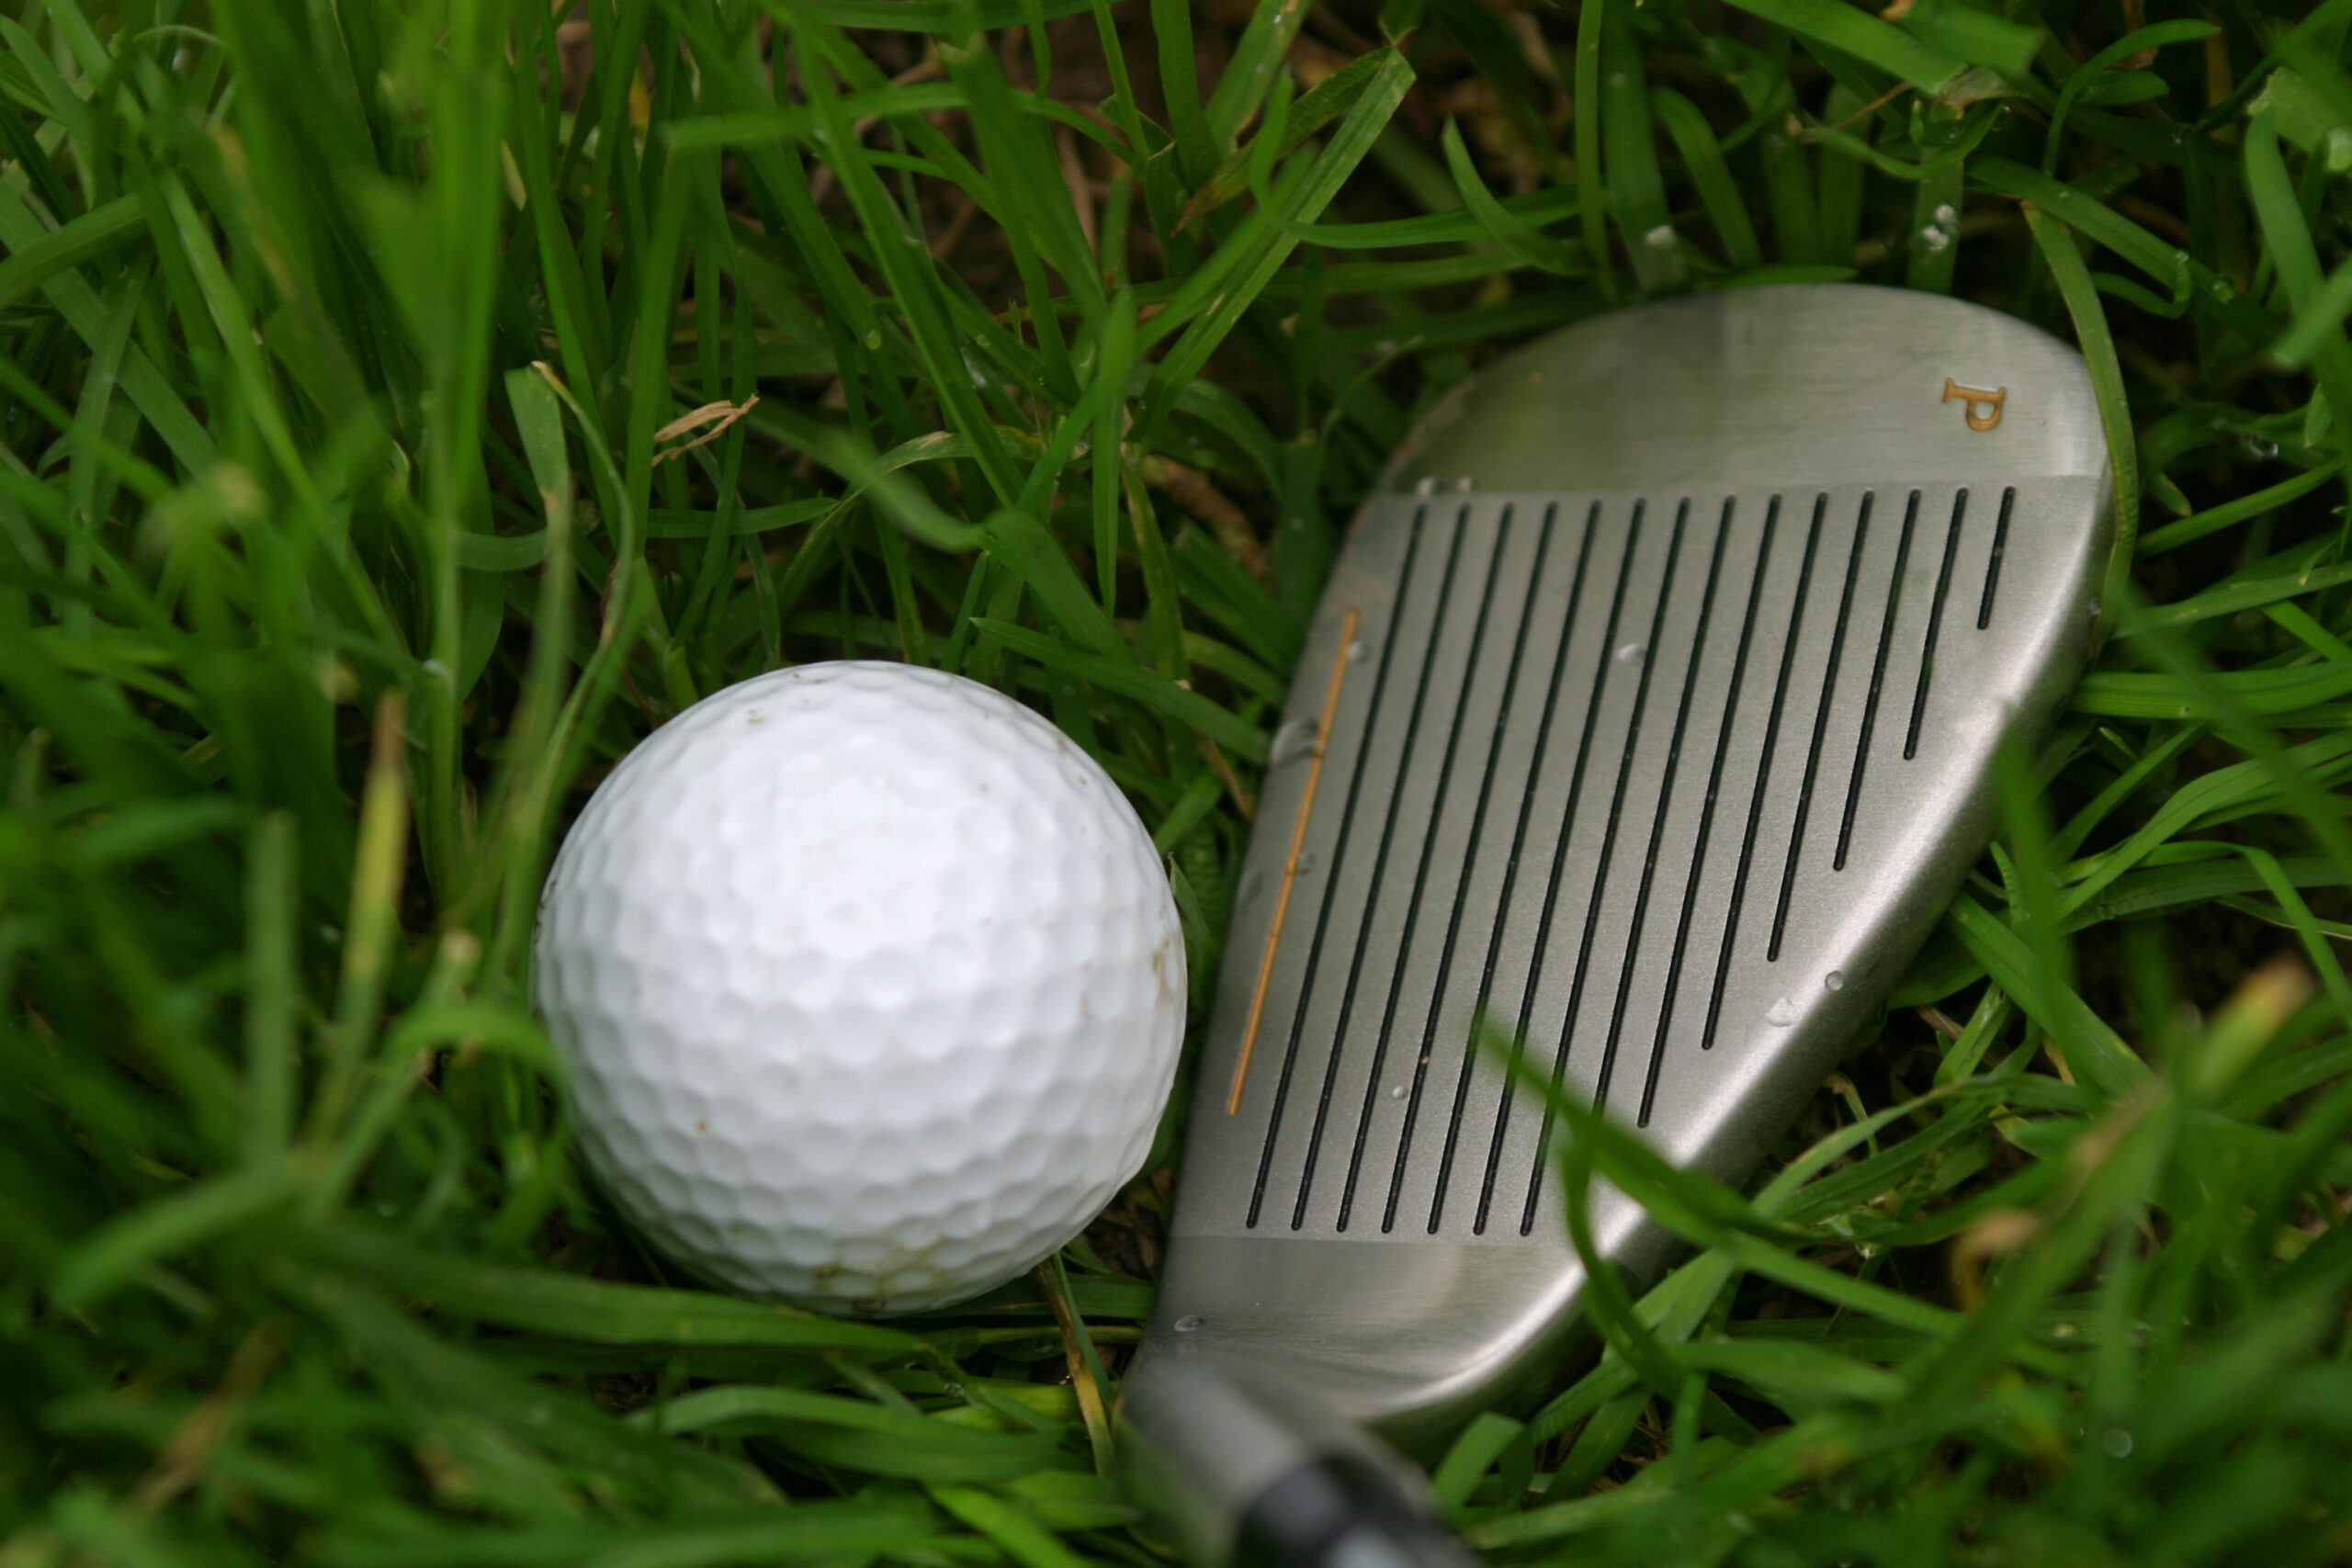 A golf ball resting on the grass next to a golf club.